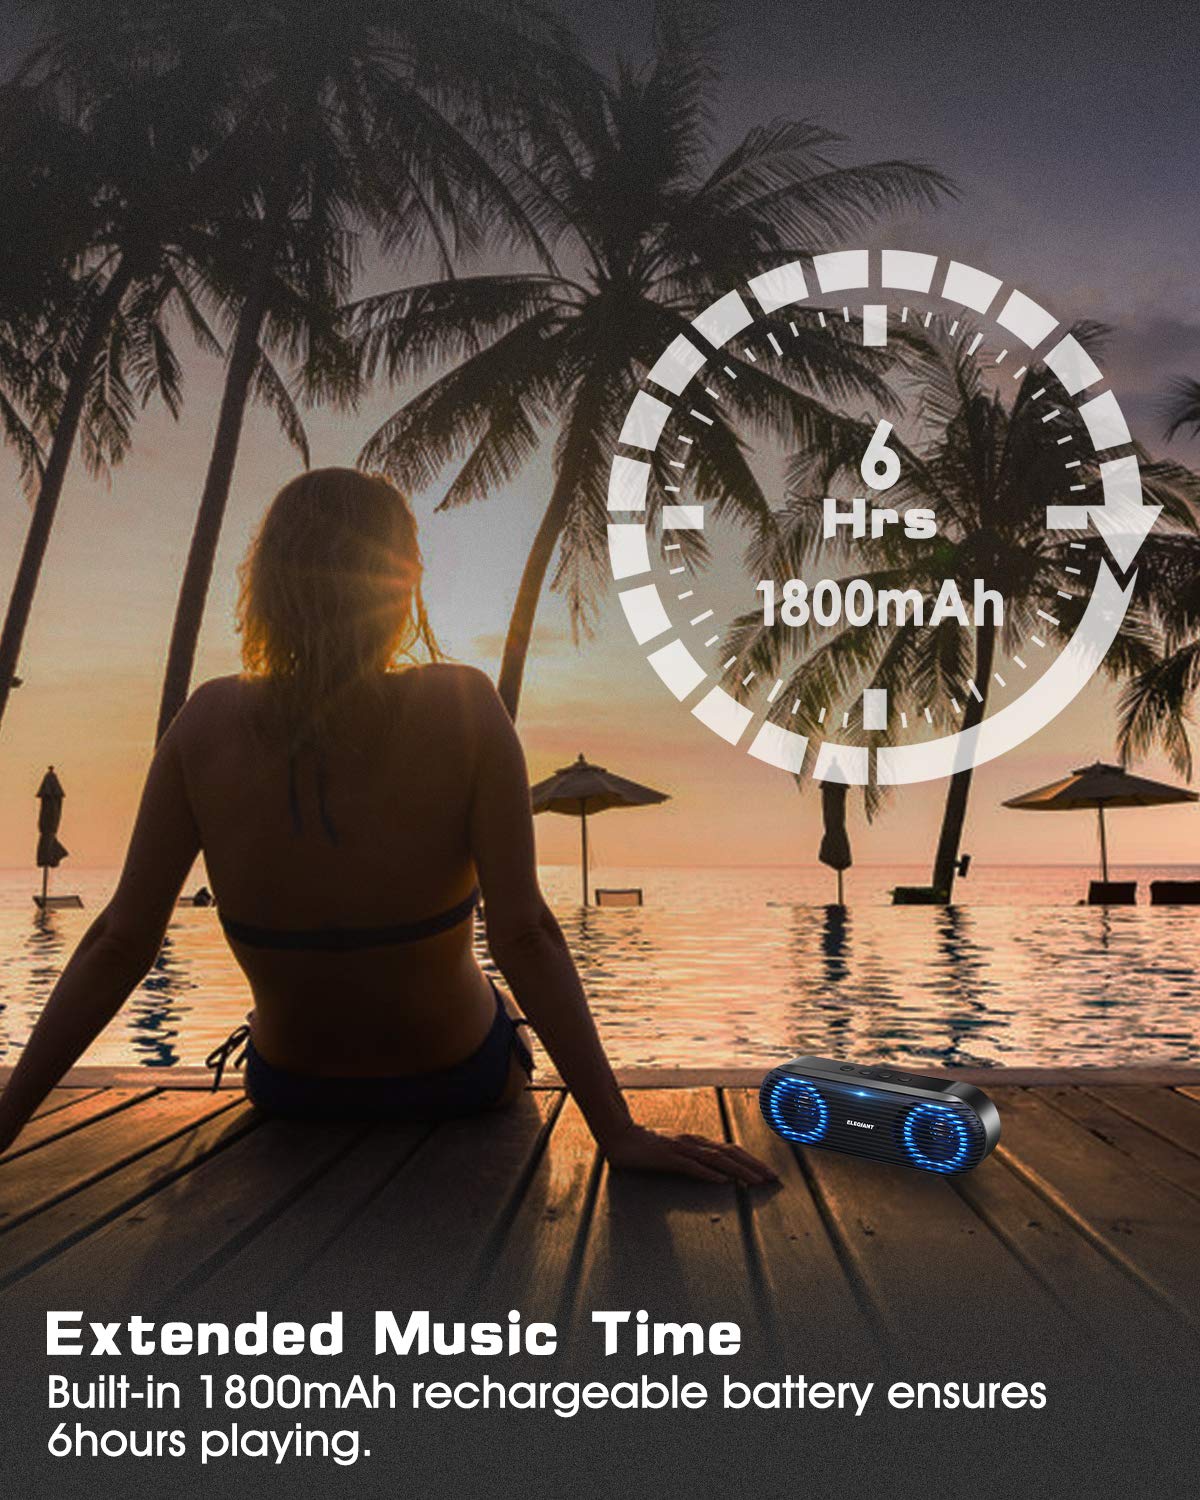 Novashion EGT-01 Bluetooth 5.0 Speaker Wireless Sound Box 10W Stereo Sound Bass